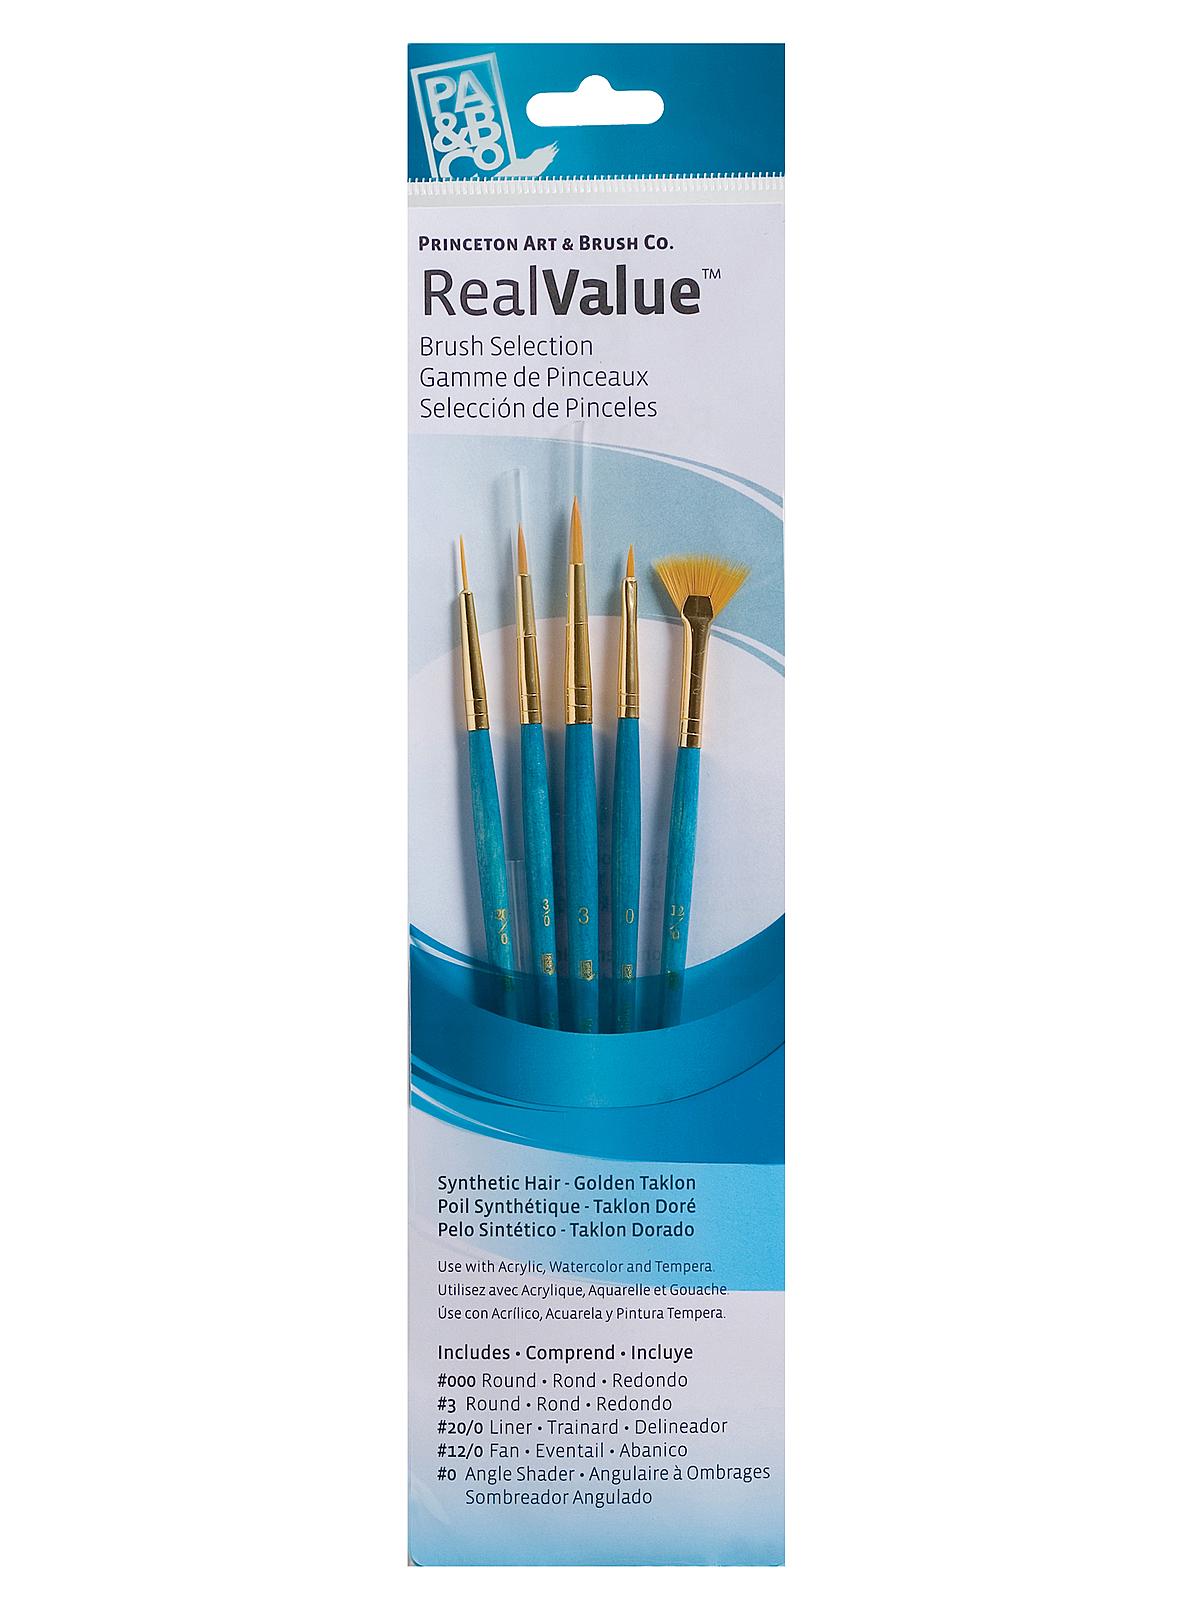 PRINCETON Real Value Series 9000 Light Blue Short Handled Brush Sets